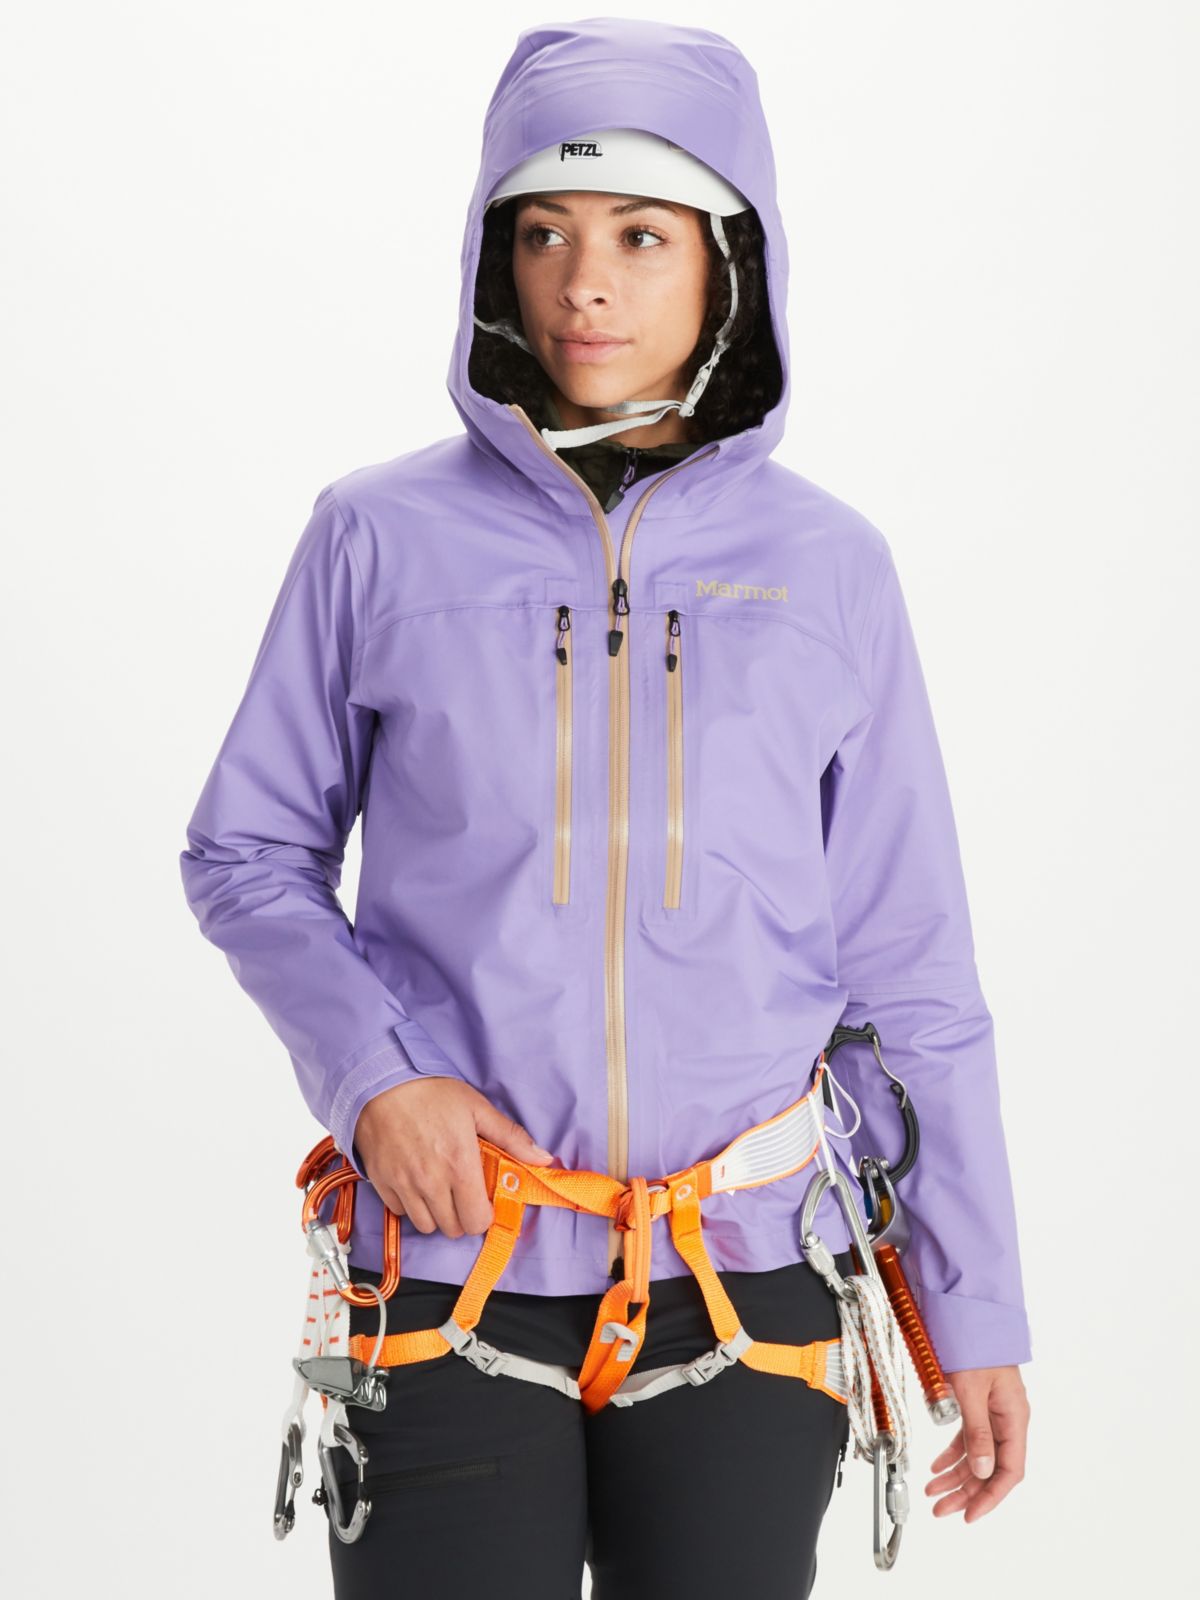 climber modeling light jacket with hood